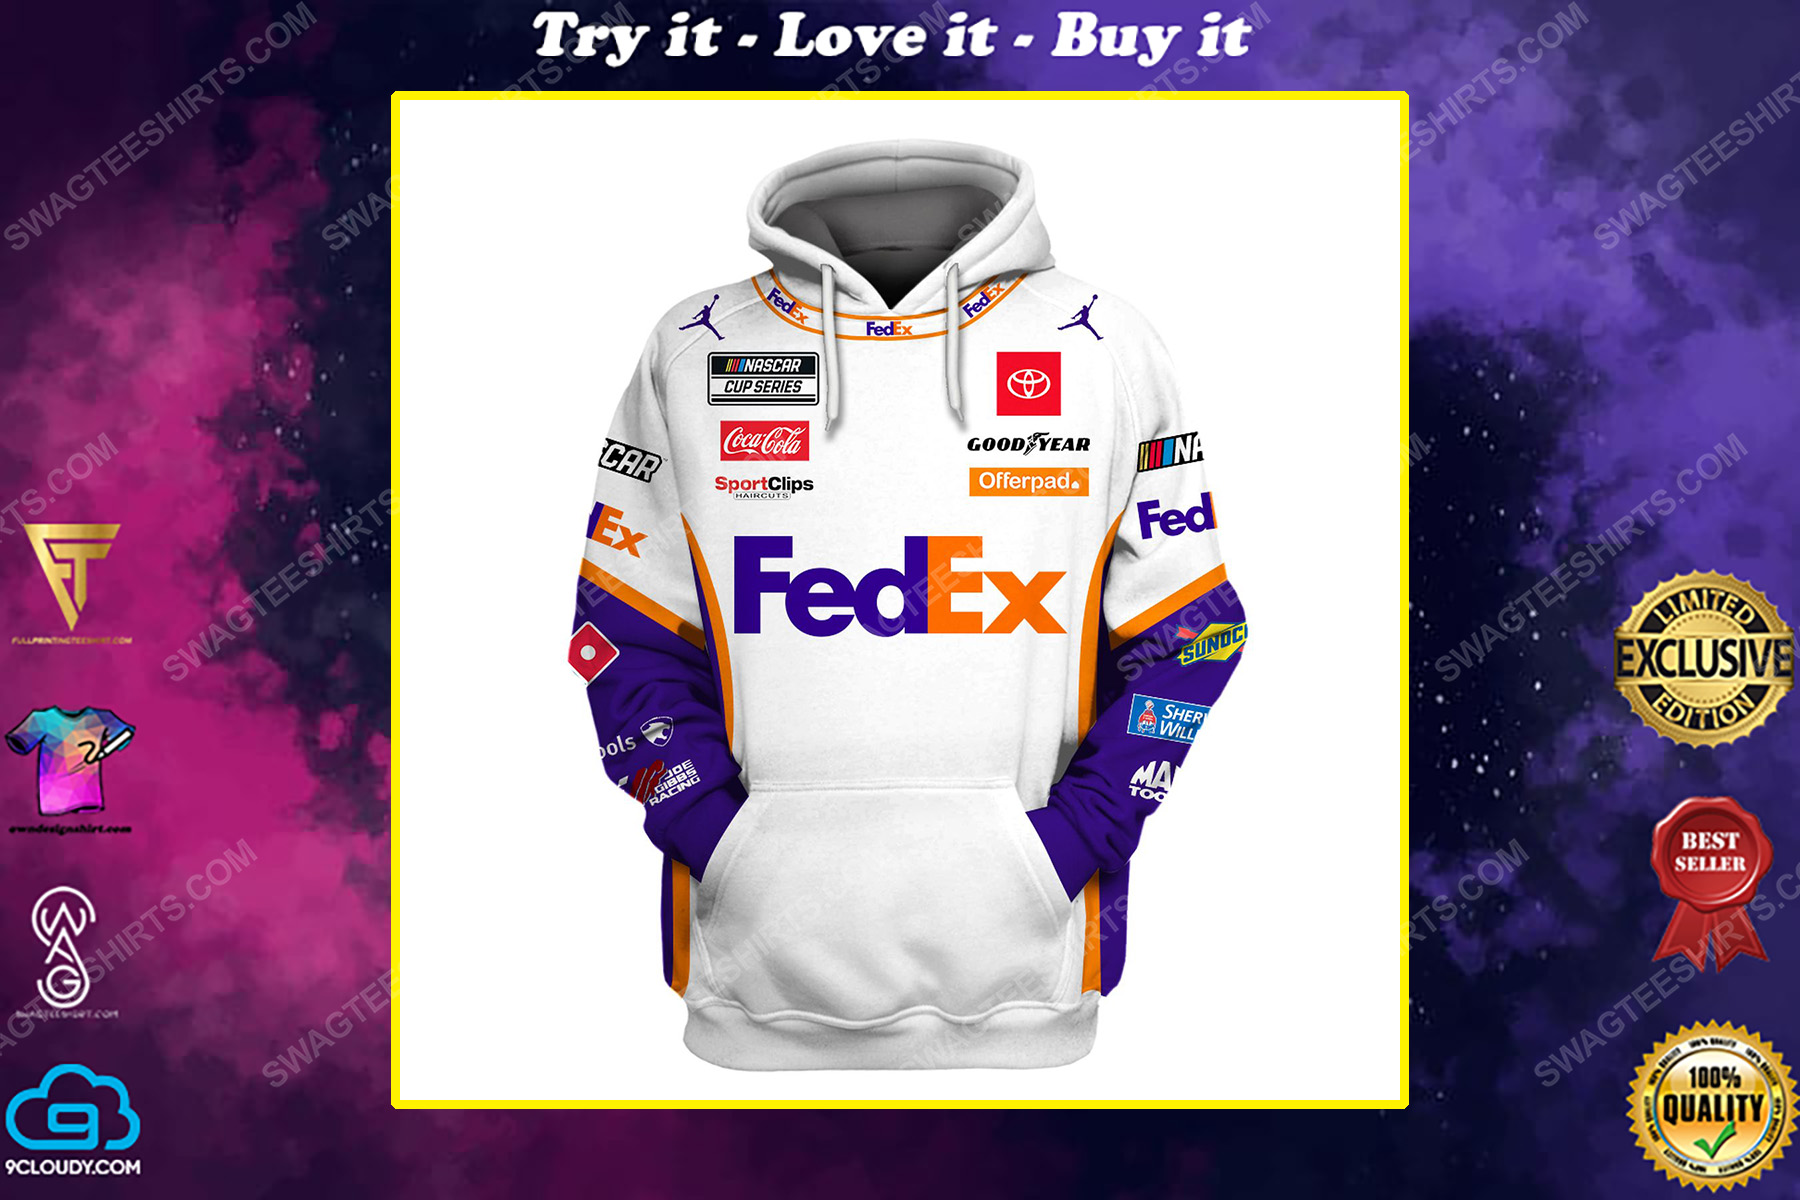 Custom fedex racing team motorsport full printing shirt